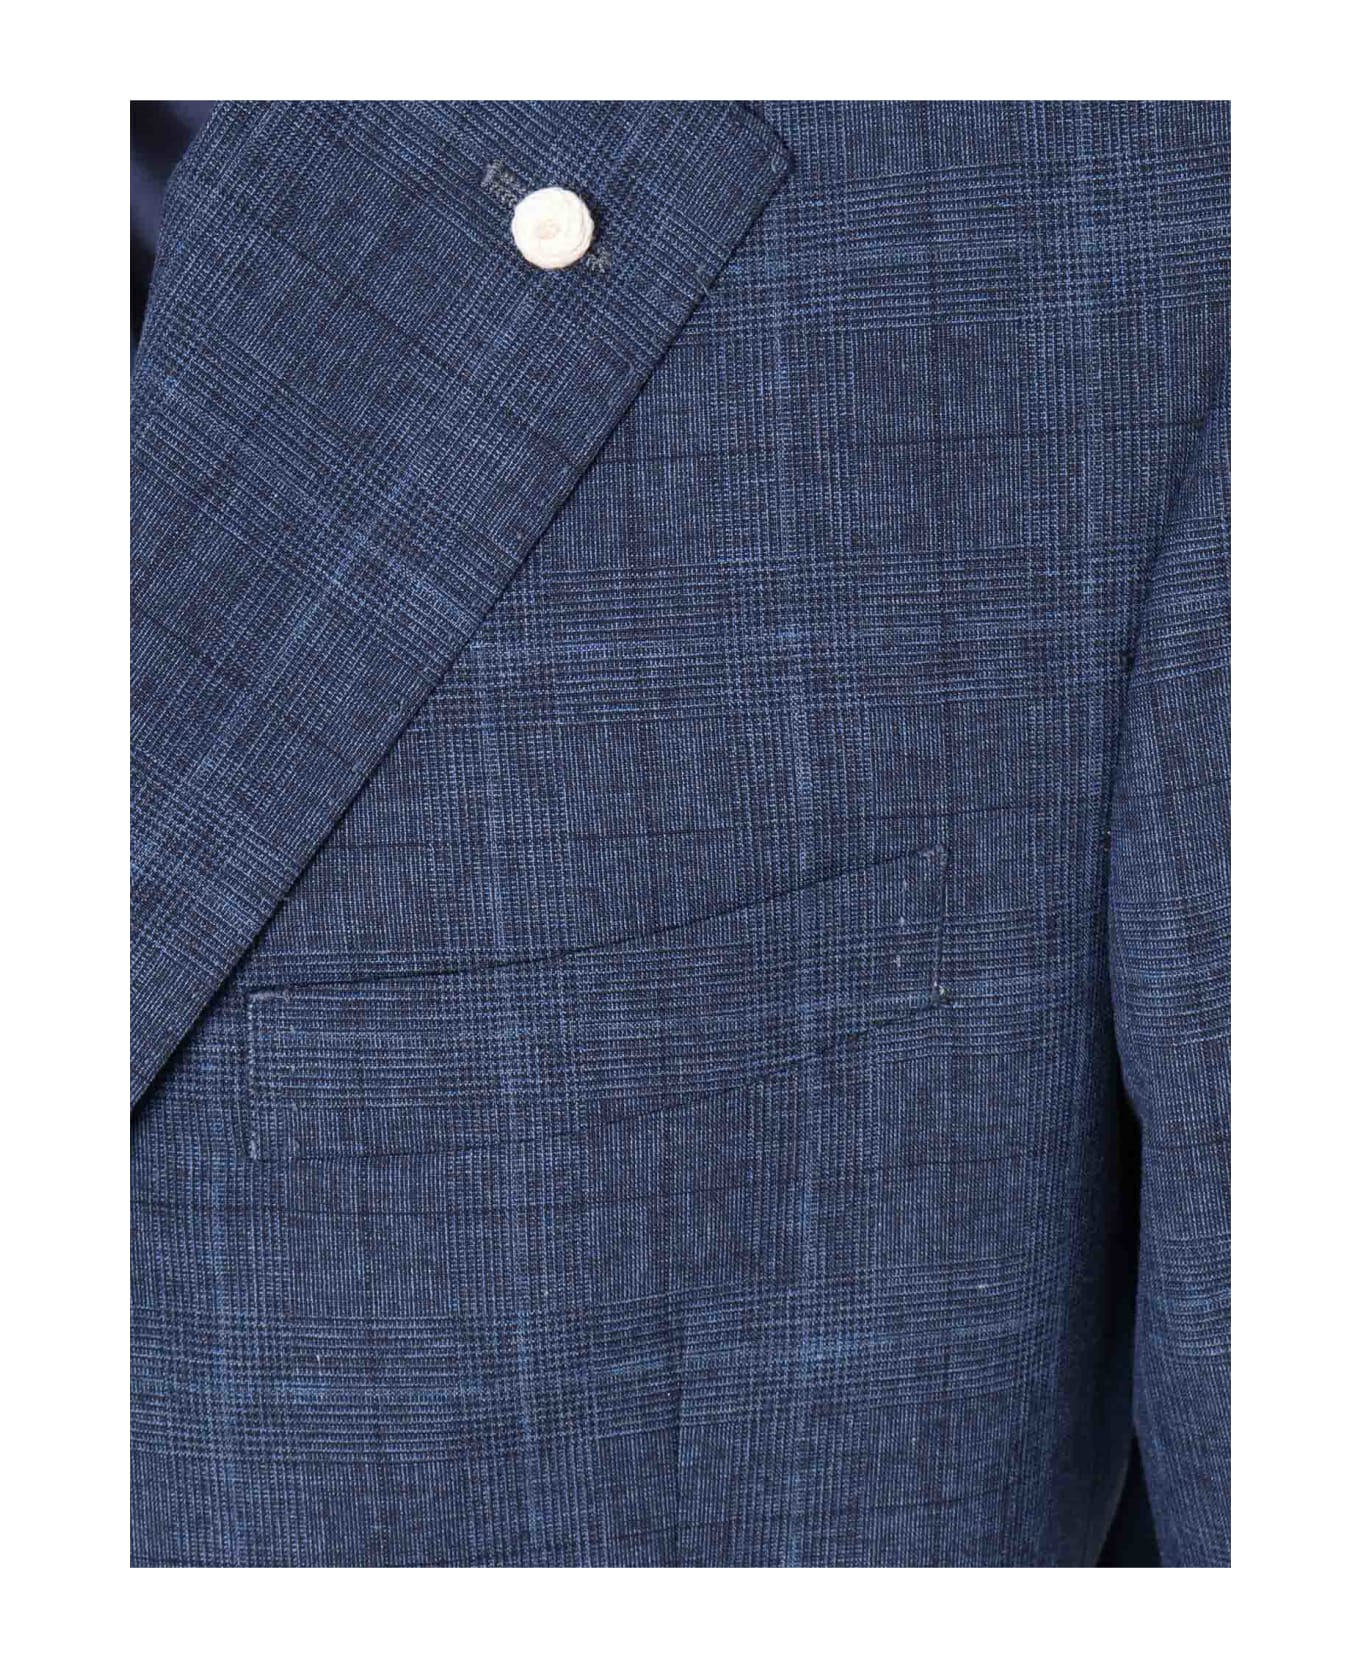 Luigi Bianchi Mantova Blue Pinstripe Suit - BLUE スーツ